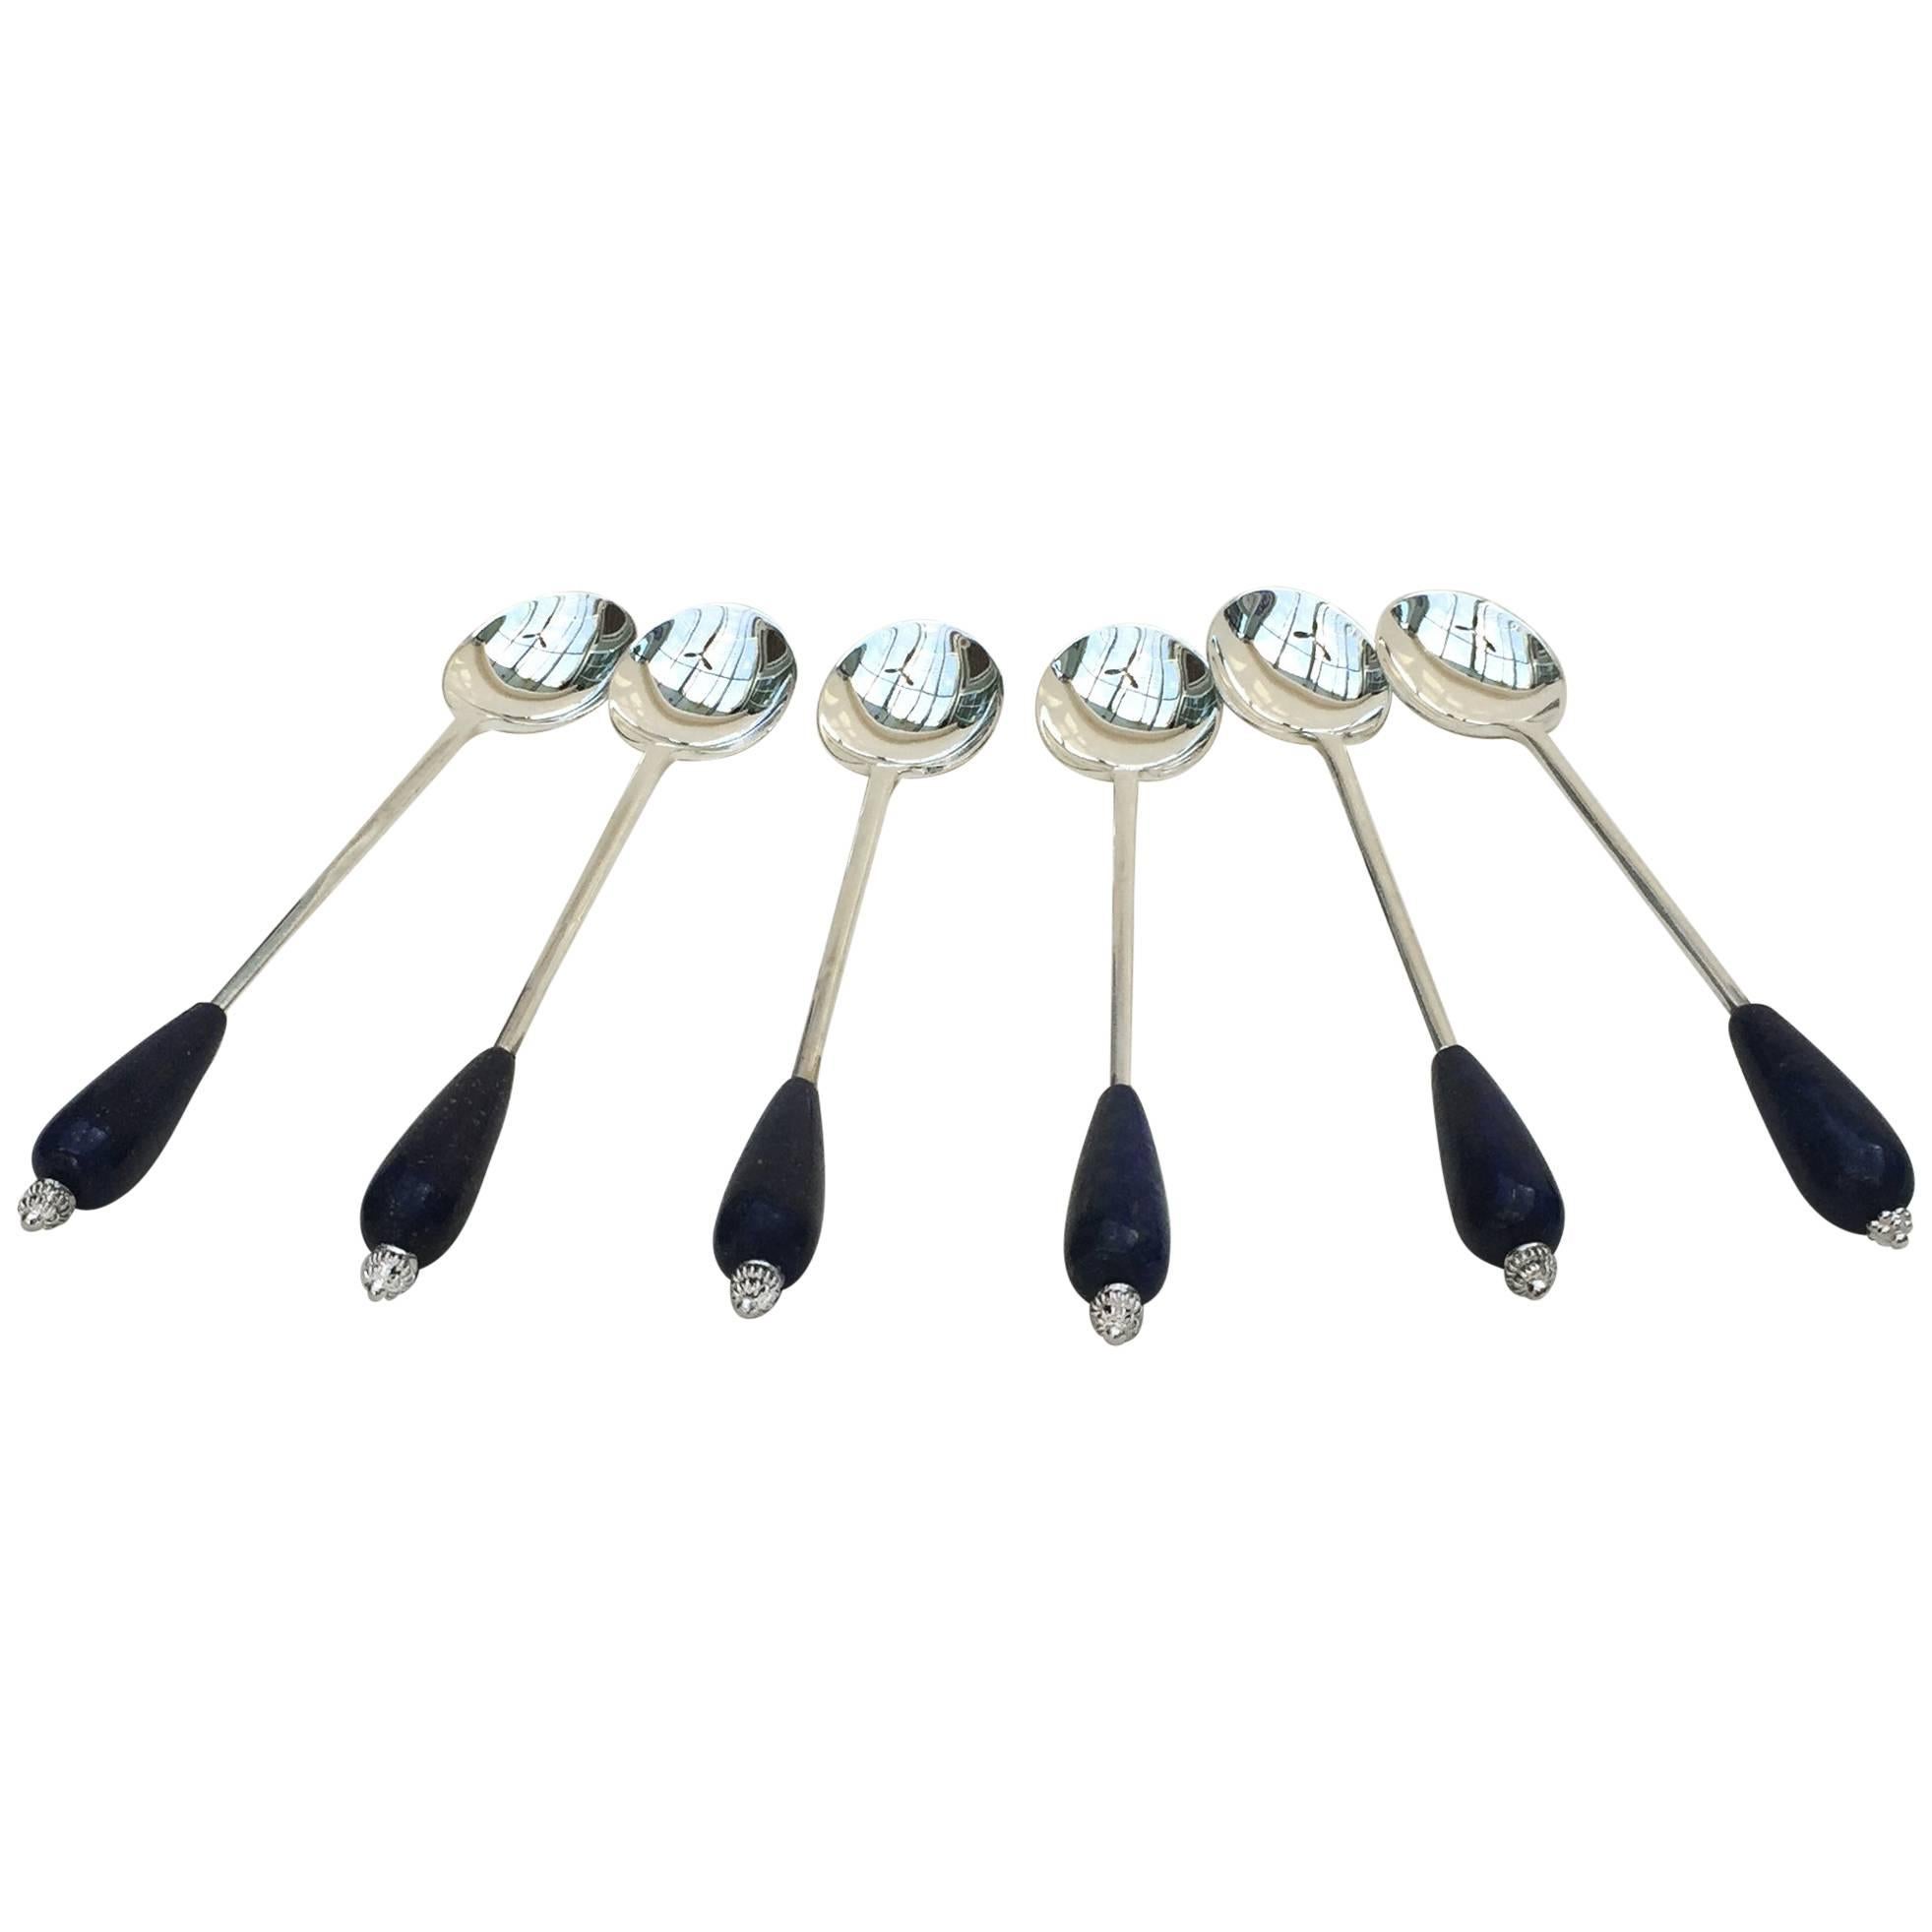 Six English Silver Plated Tea Spoon Set with Lapis Lazuli by Marina J